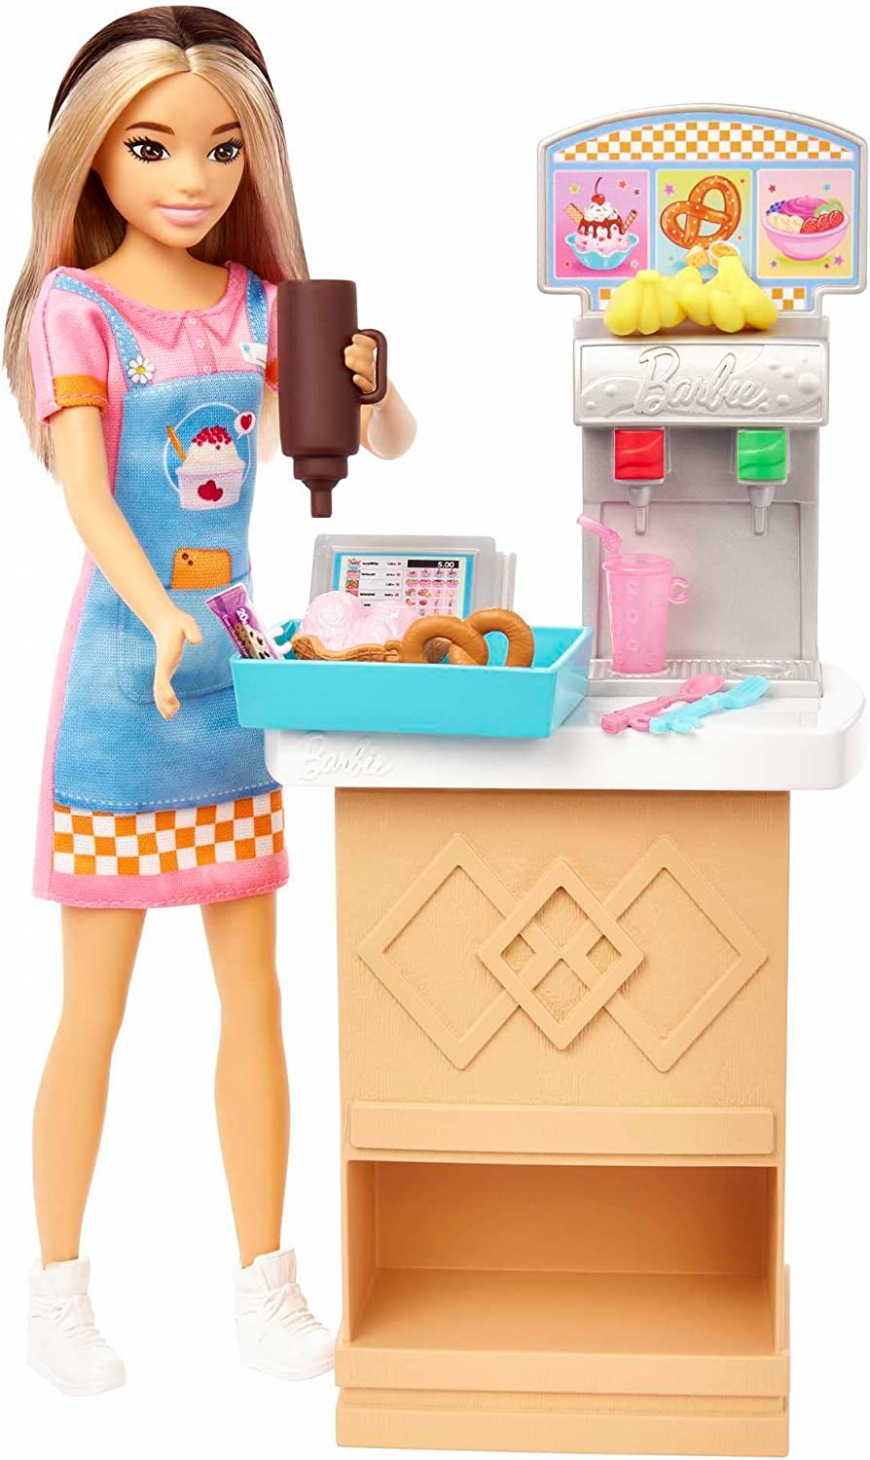 Barbie: Skipper and the Big Babysitting Adventure movie dolls